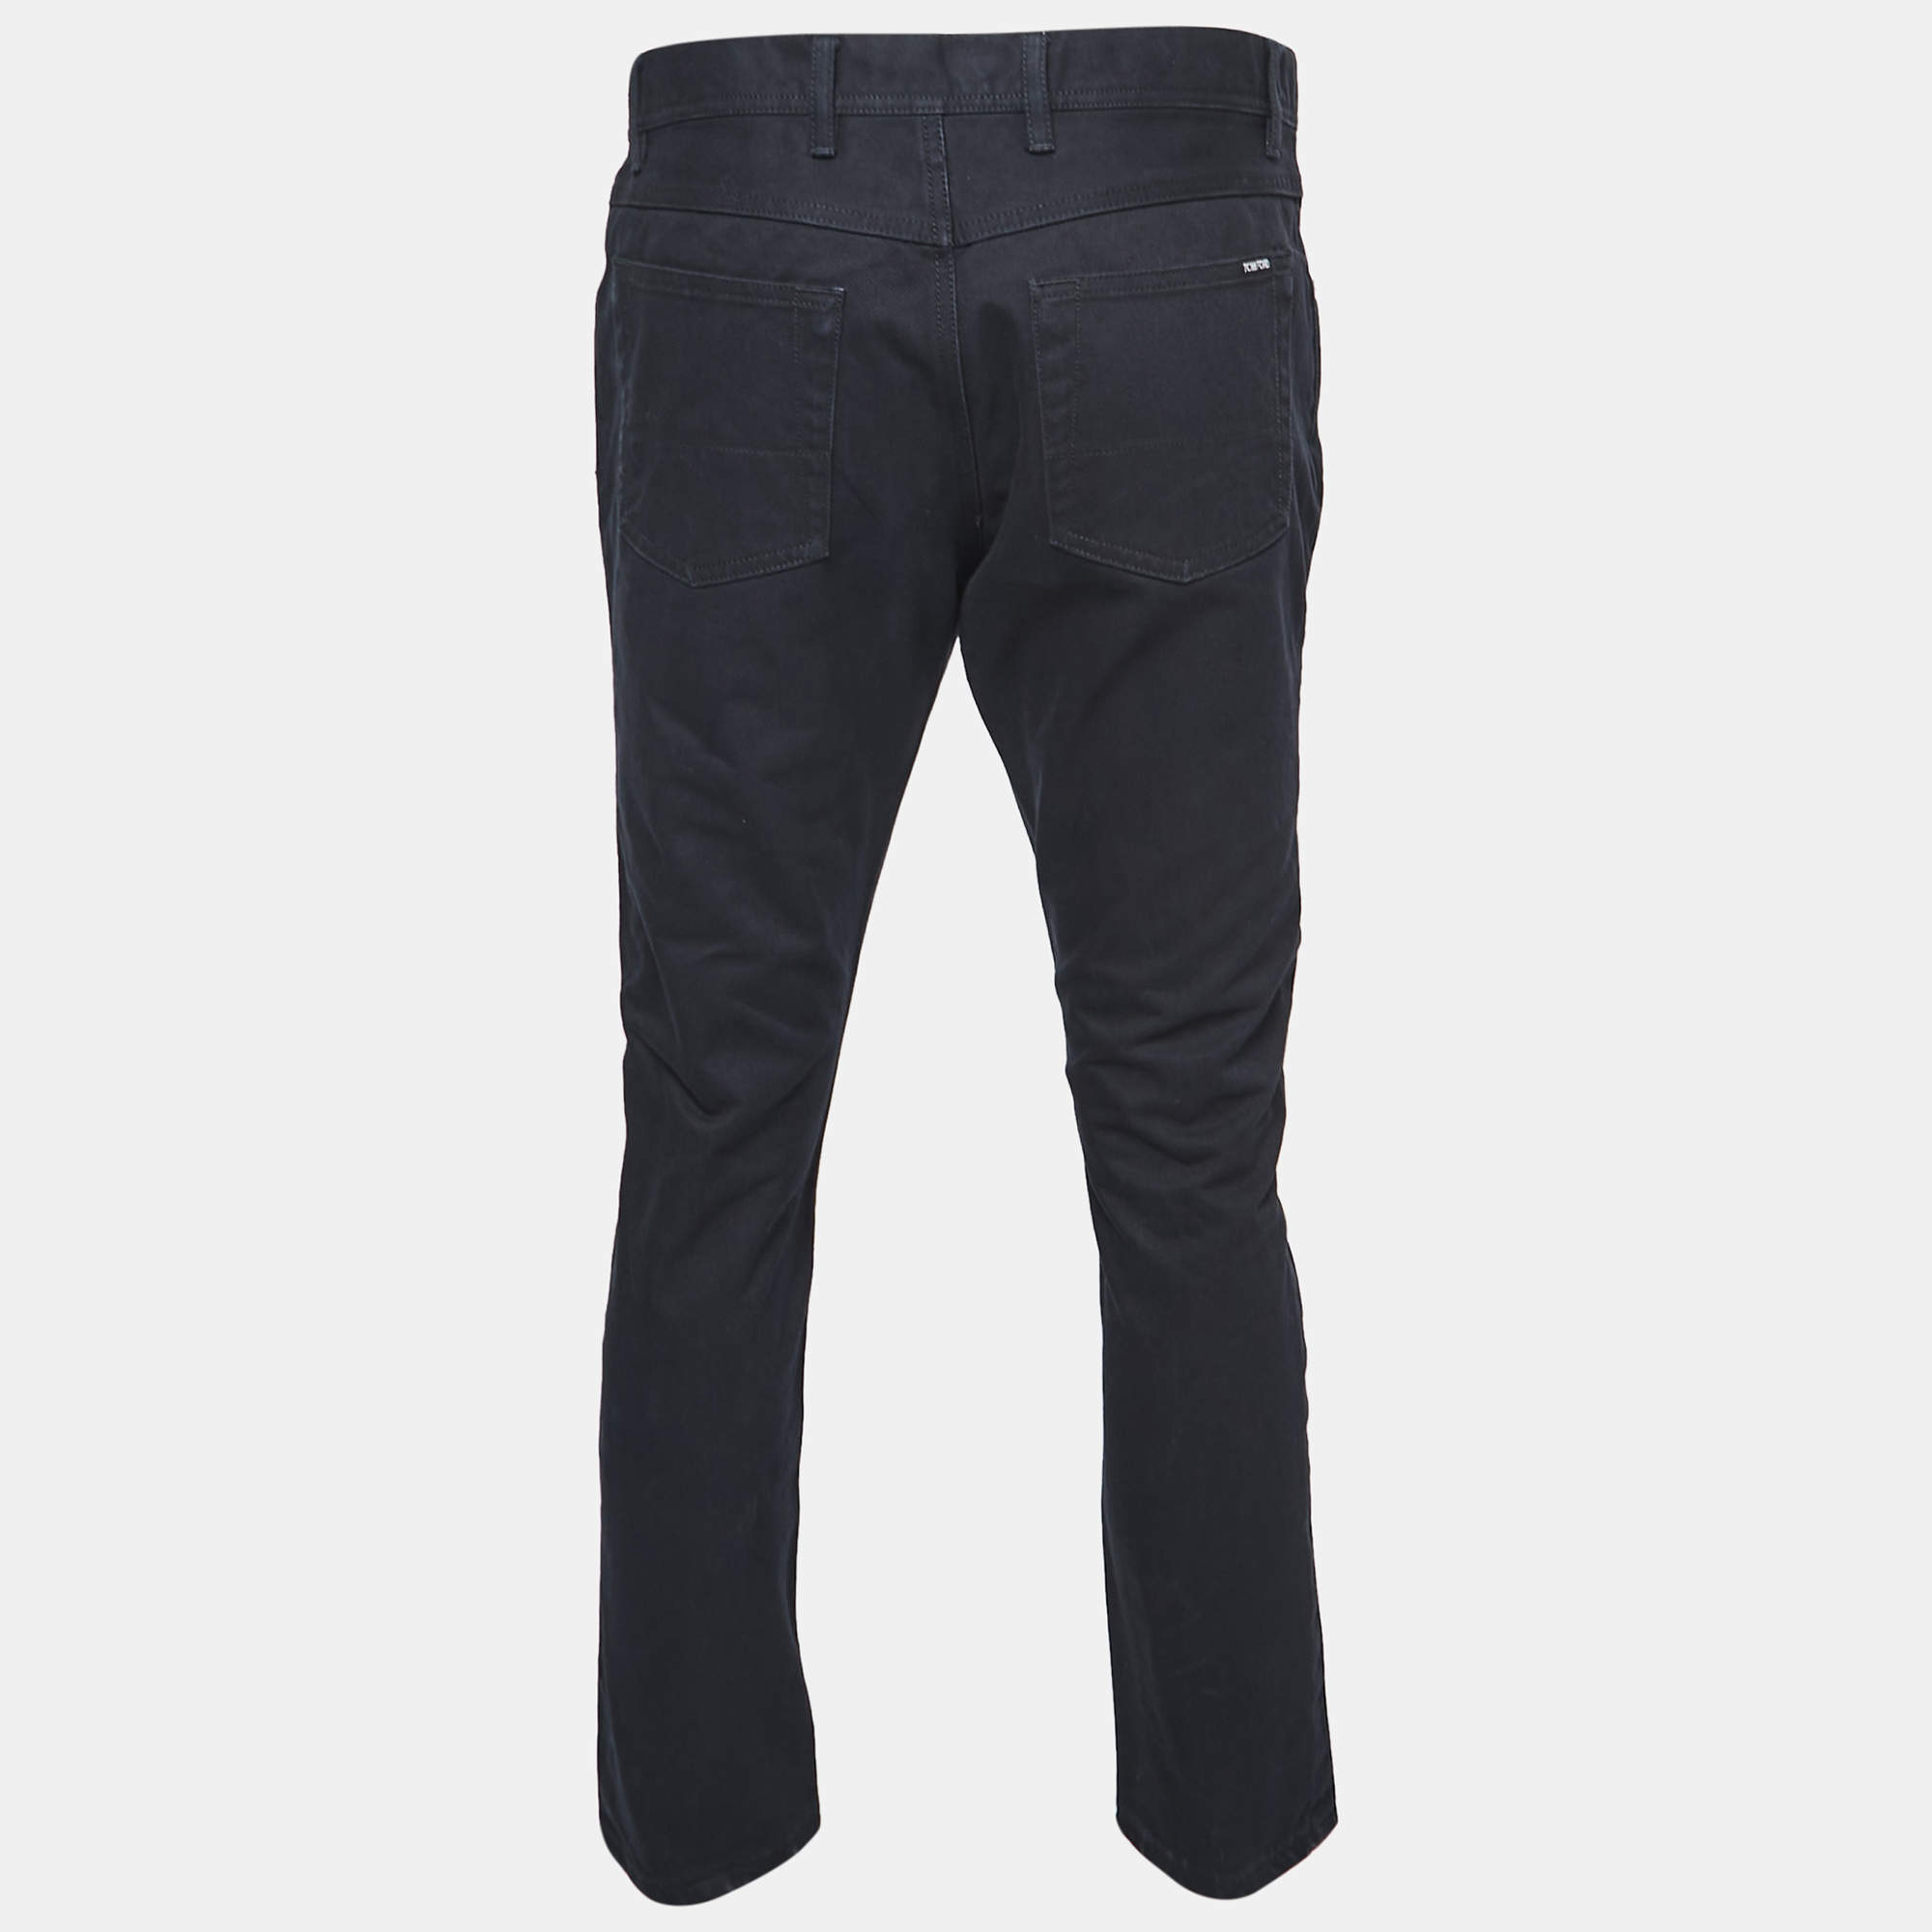 Tom Ford Black Denim Jeans XL Waist 35